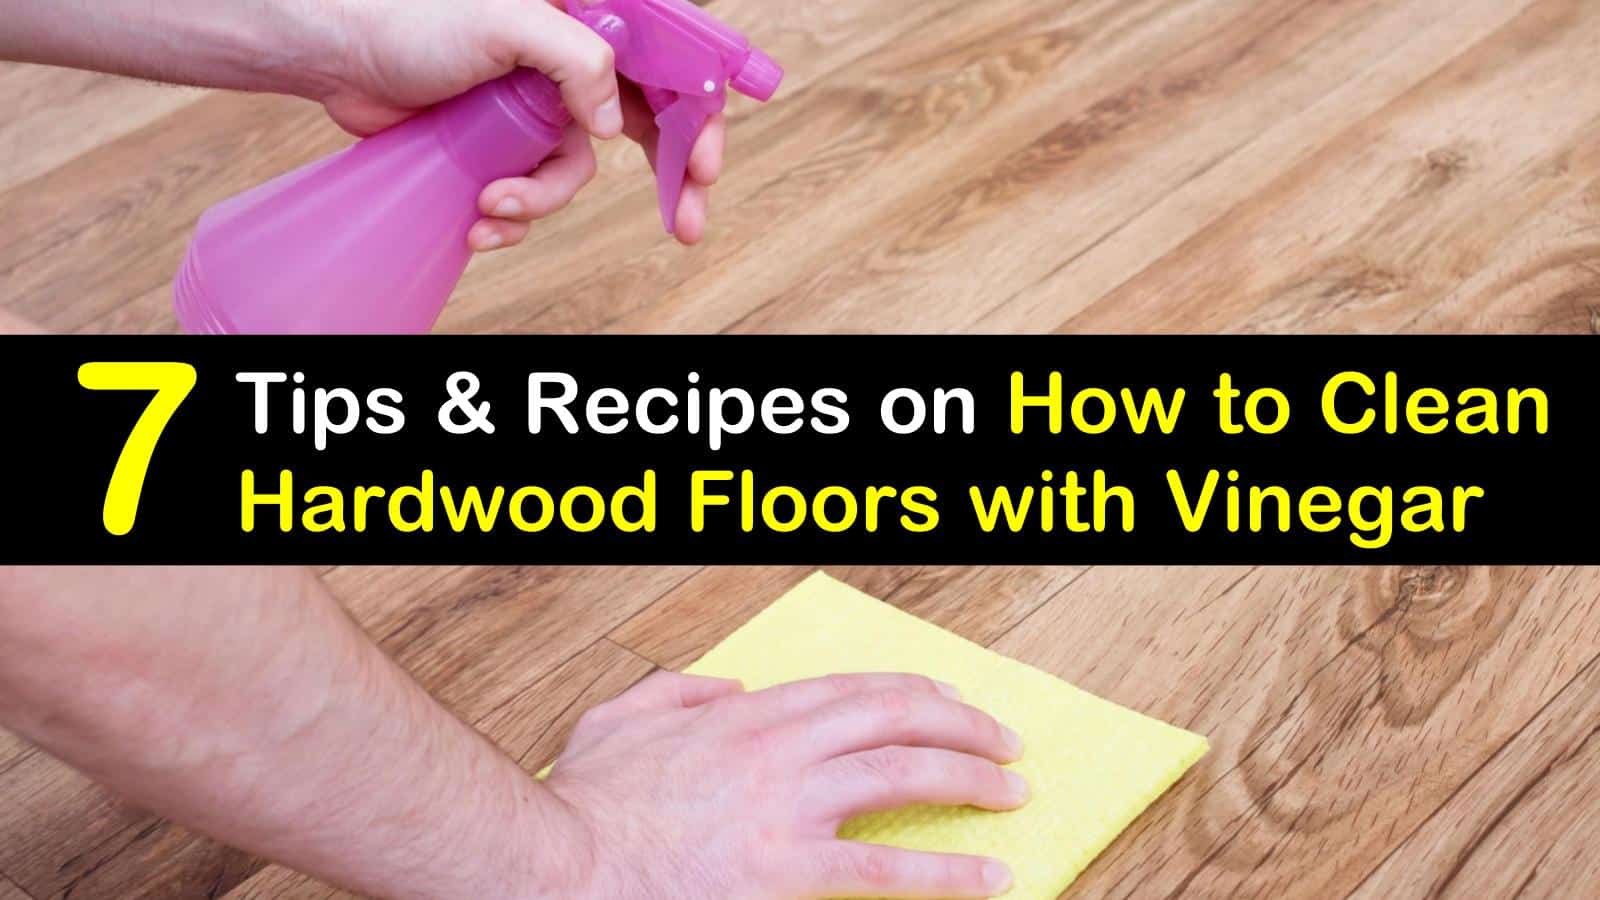 Clean Hardwood Floors With Vinegar, How To Clean Laminate Wood Floors With Vinegar